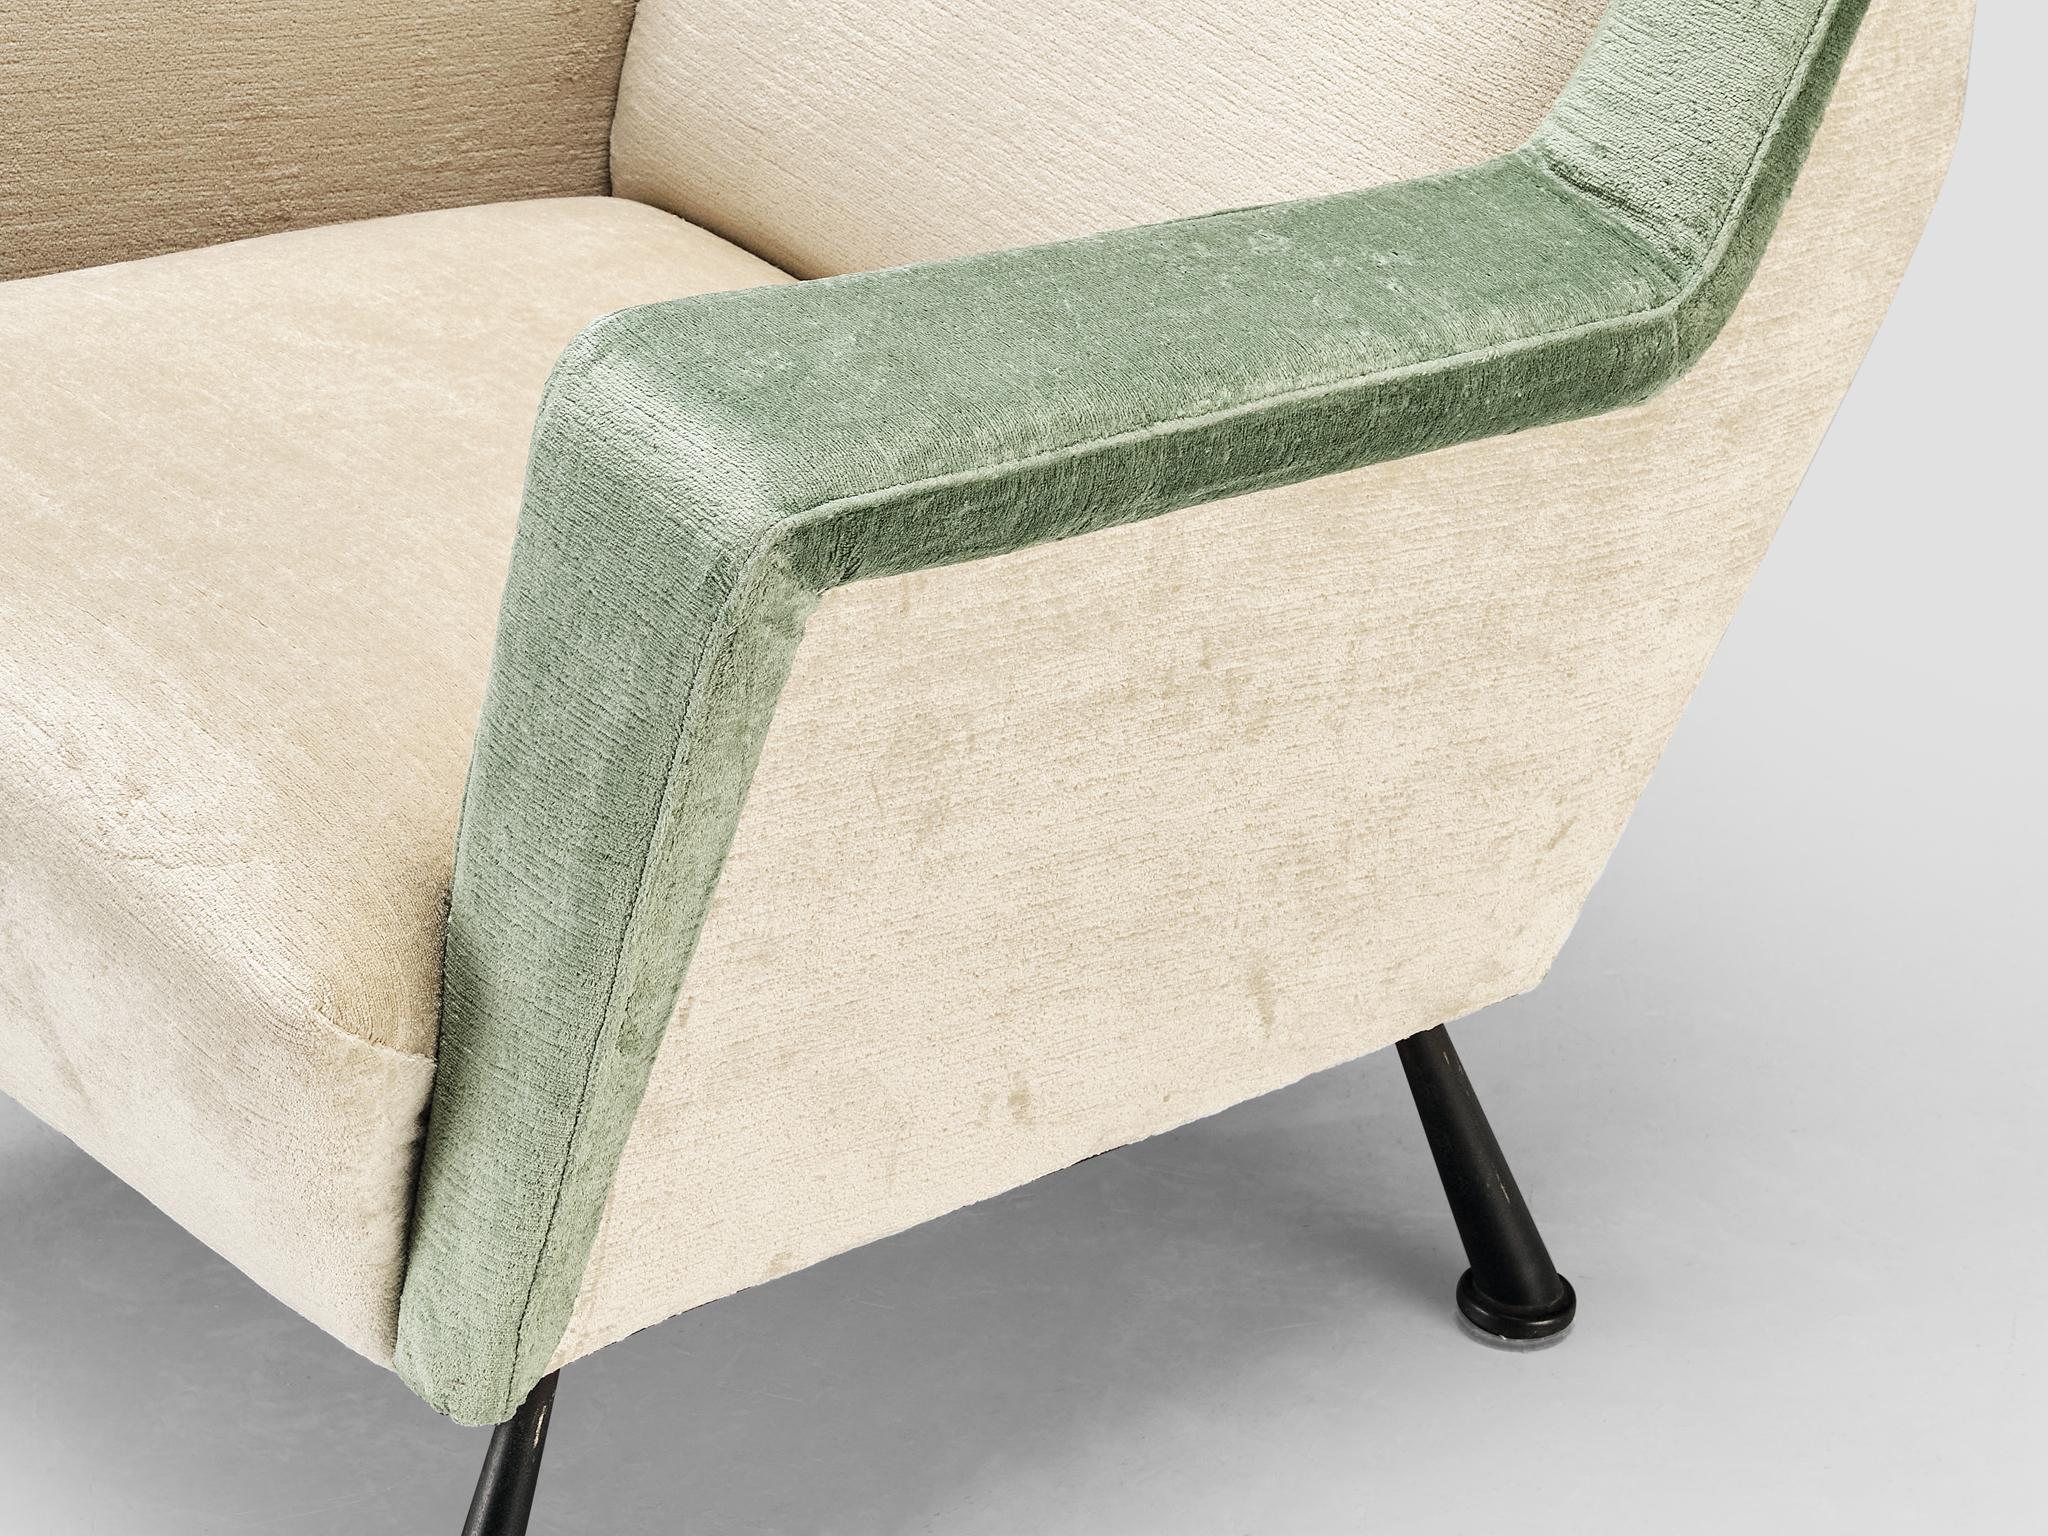 Italian Pair of Angular Lounge Chairs in Pierre Frey Velvet Upholstery